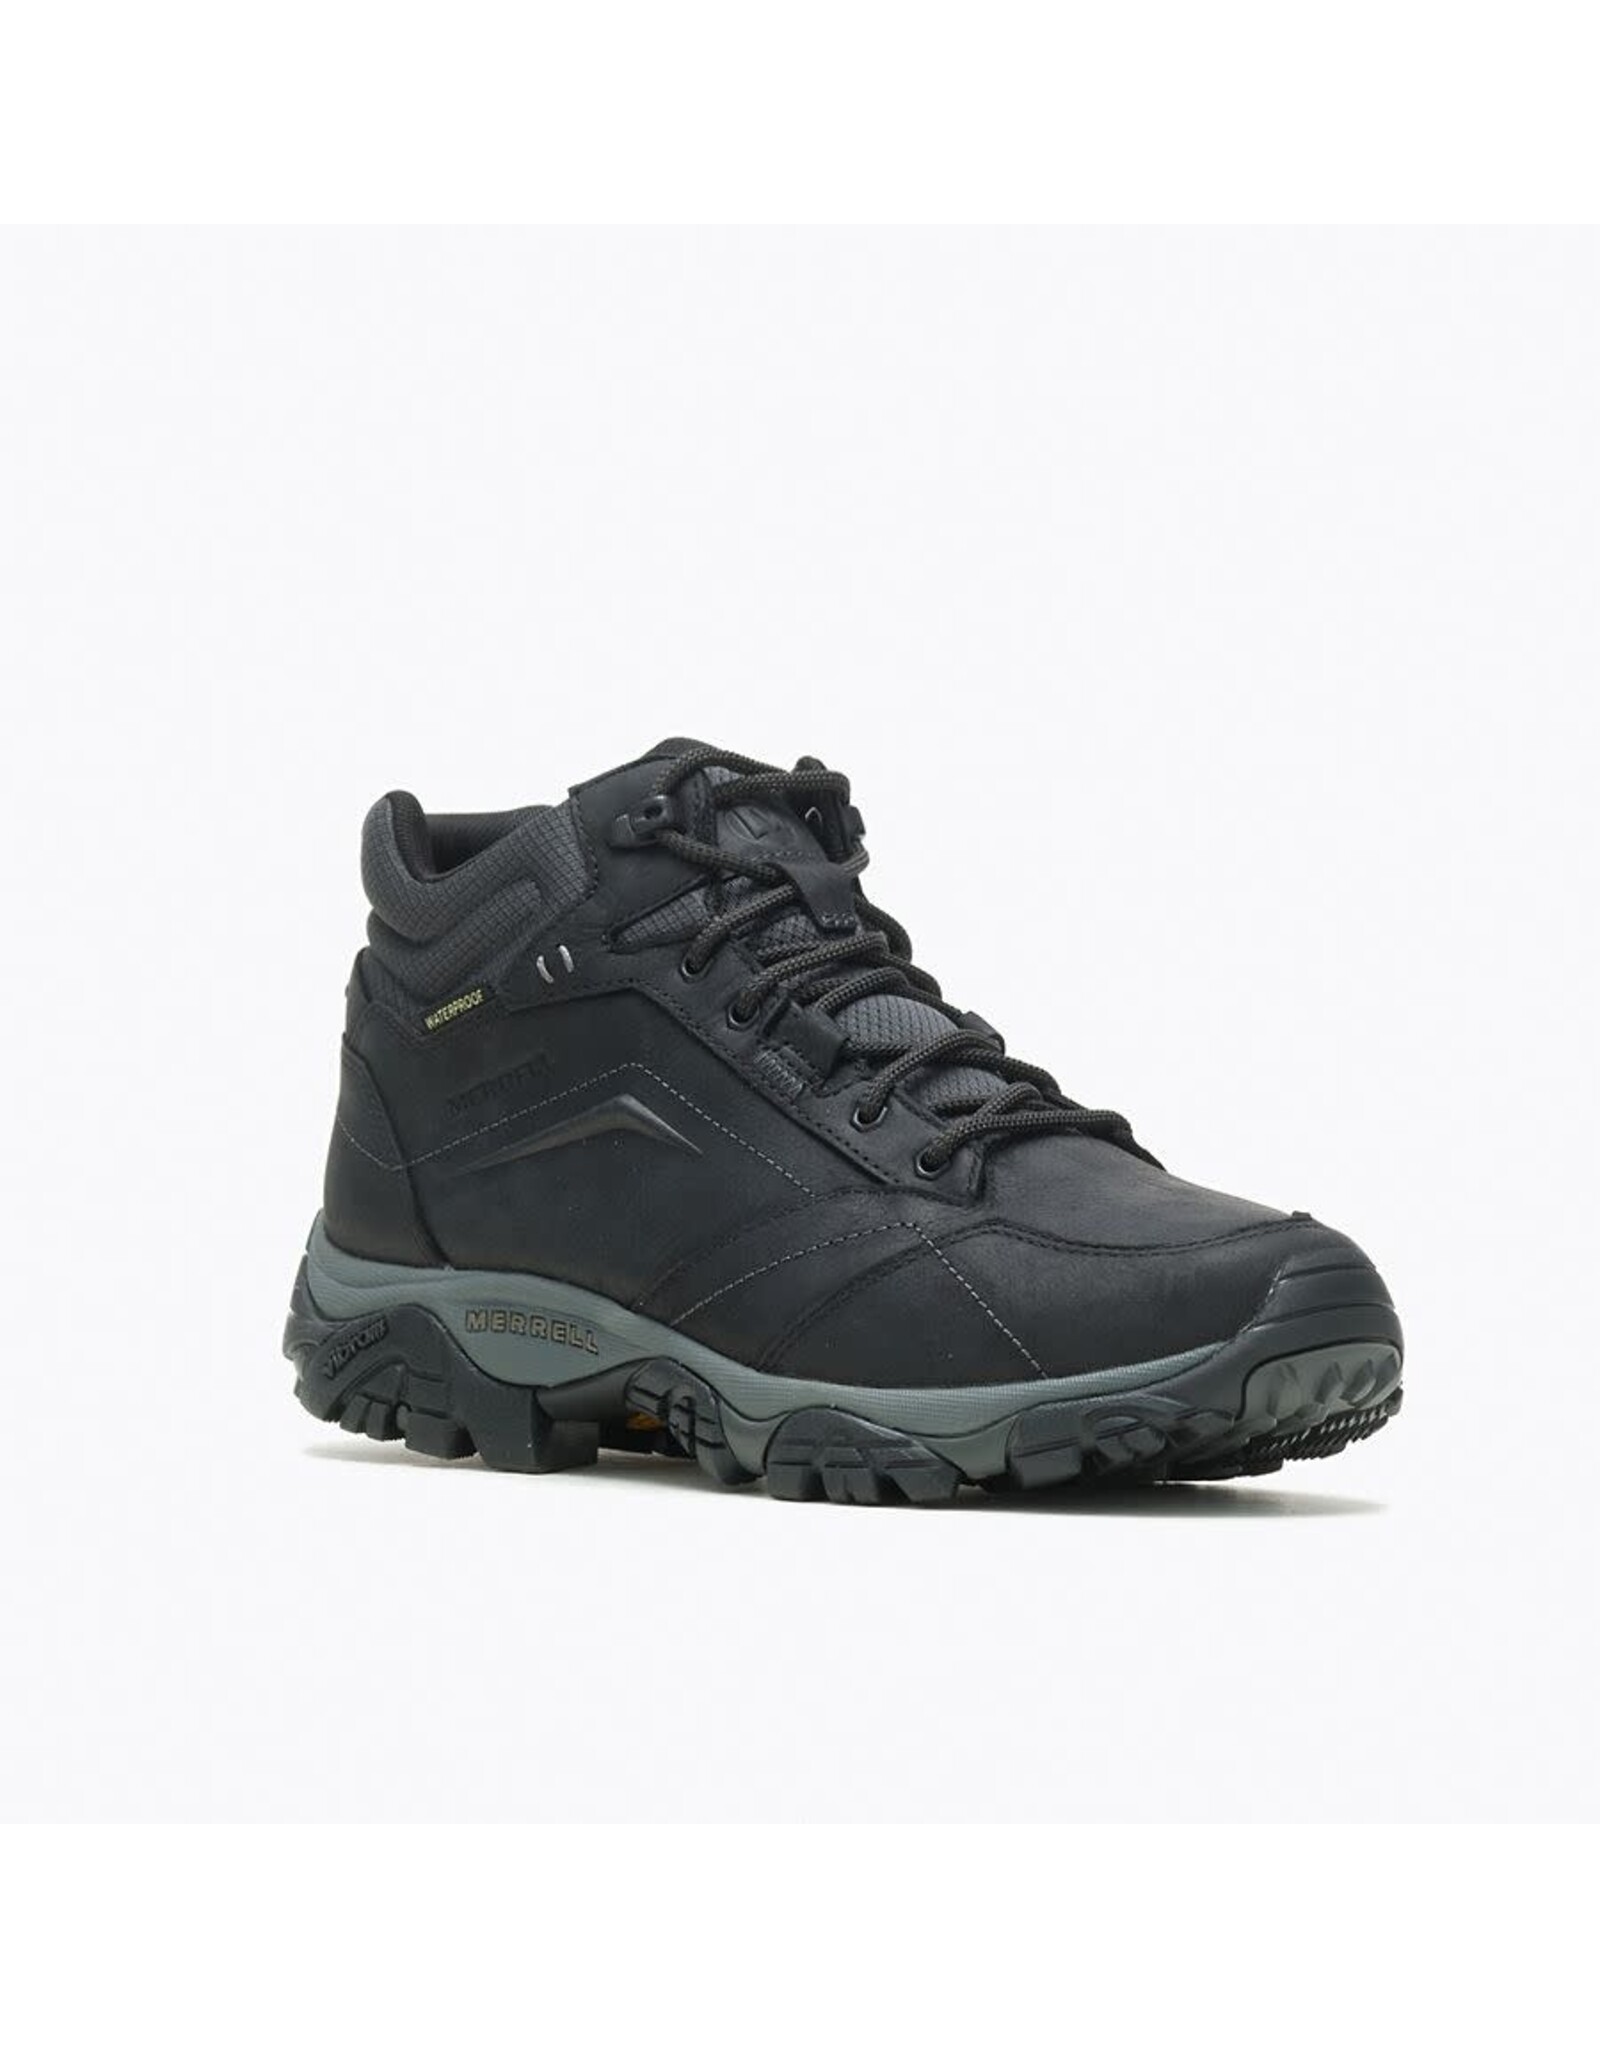 Merrell Men's Moab Adventure Mid WP Black J91815 Work Shoes